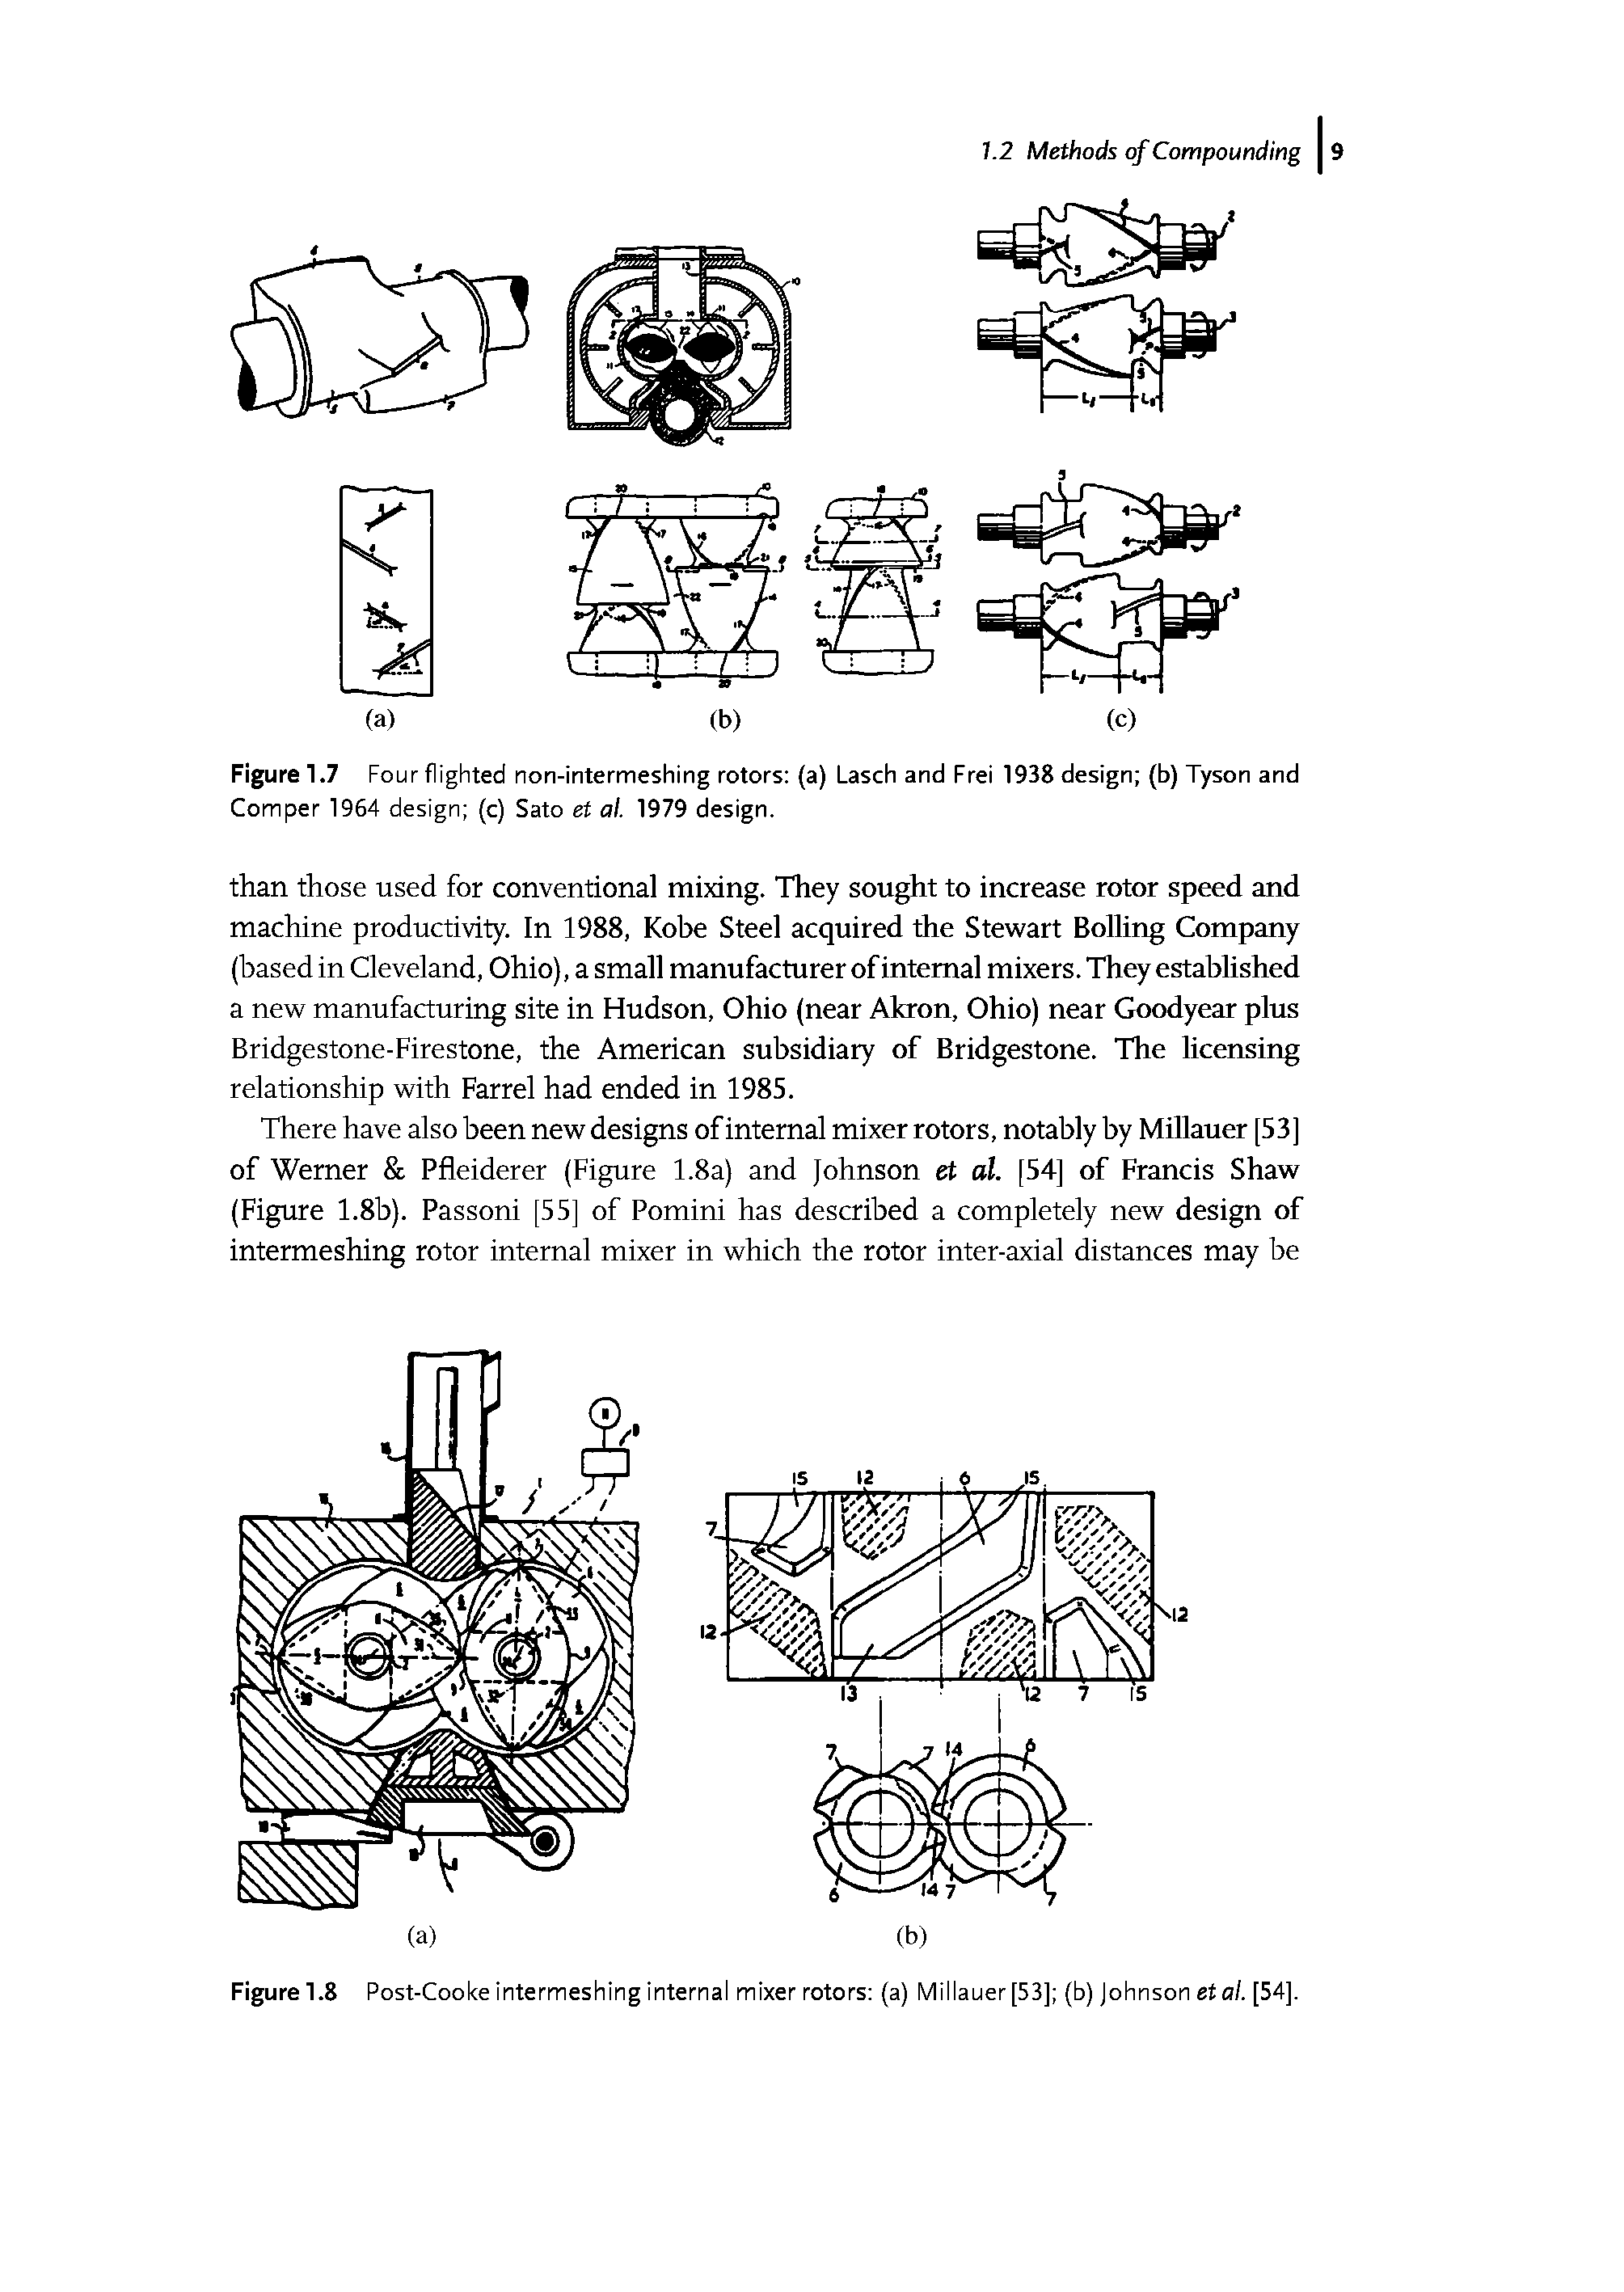 Figure 1.8 Post-Cooke intermeshing internal mixer rotors (a) Millauer[53] (b) Johnson etal. [54].